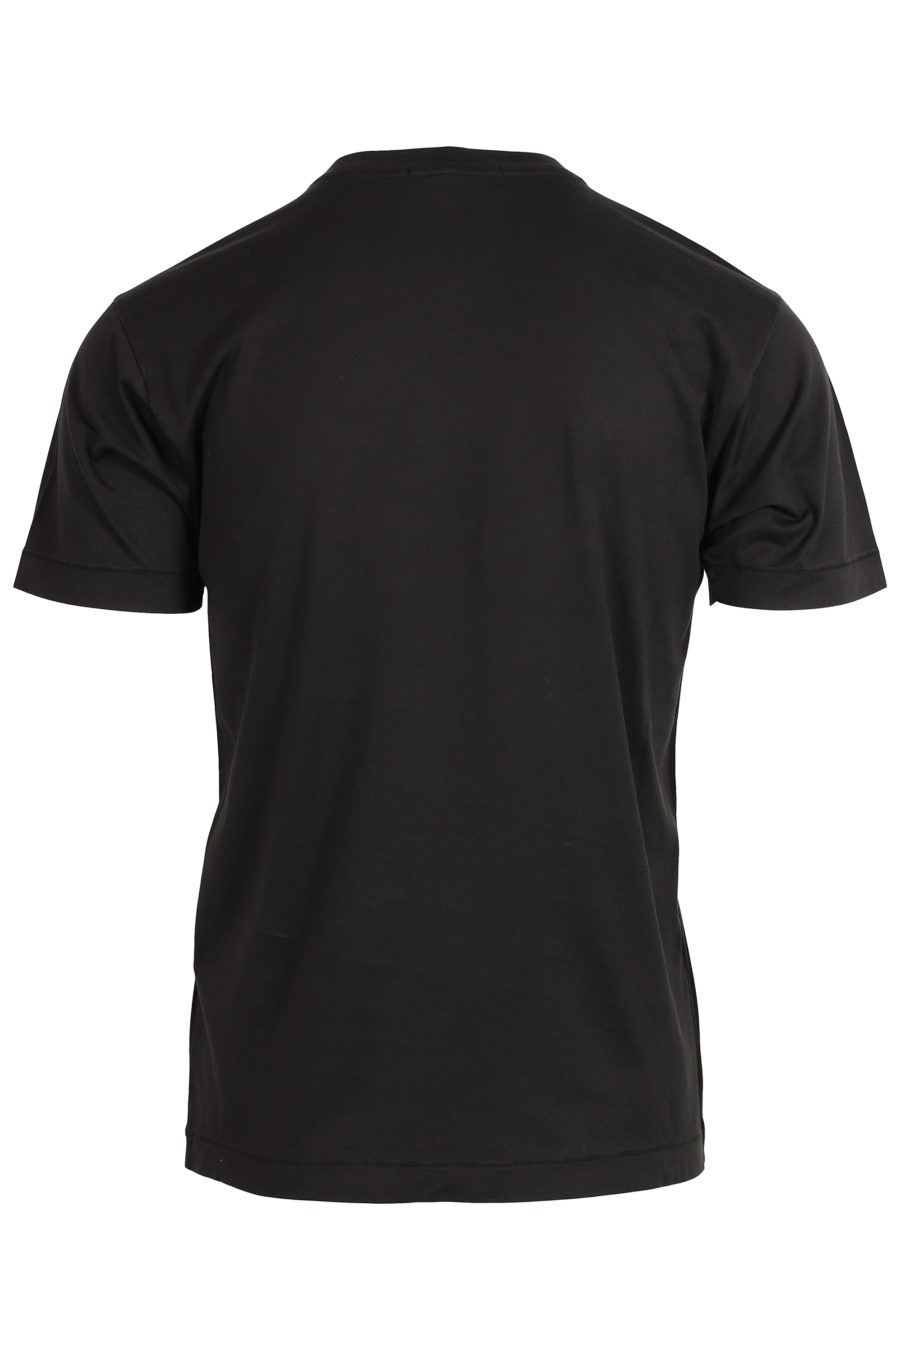 Camiseta negra con parche - IMG 3594 1